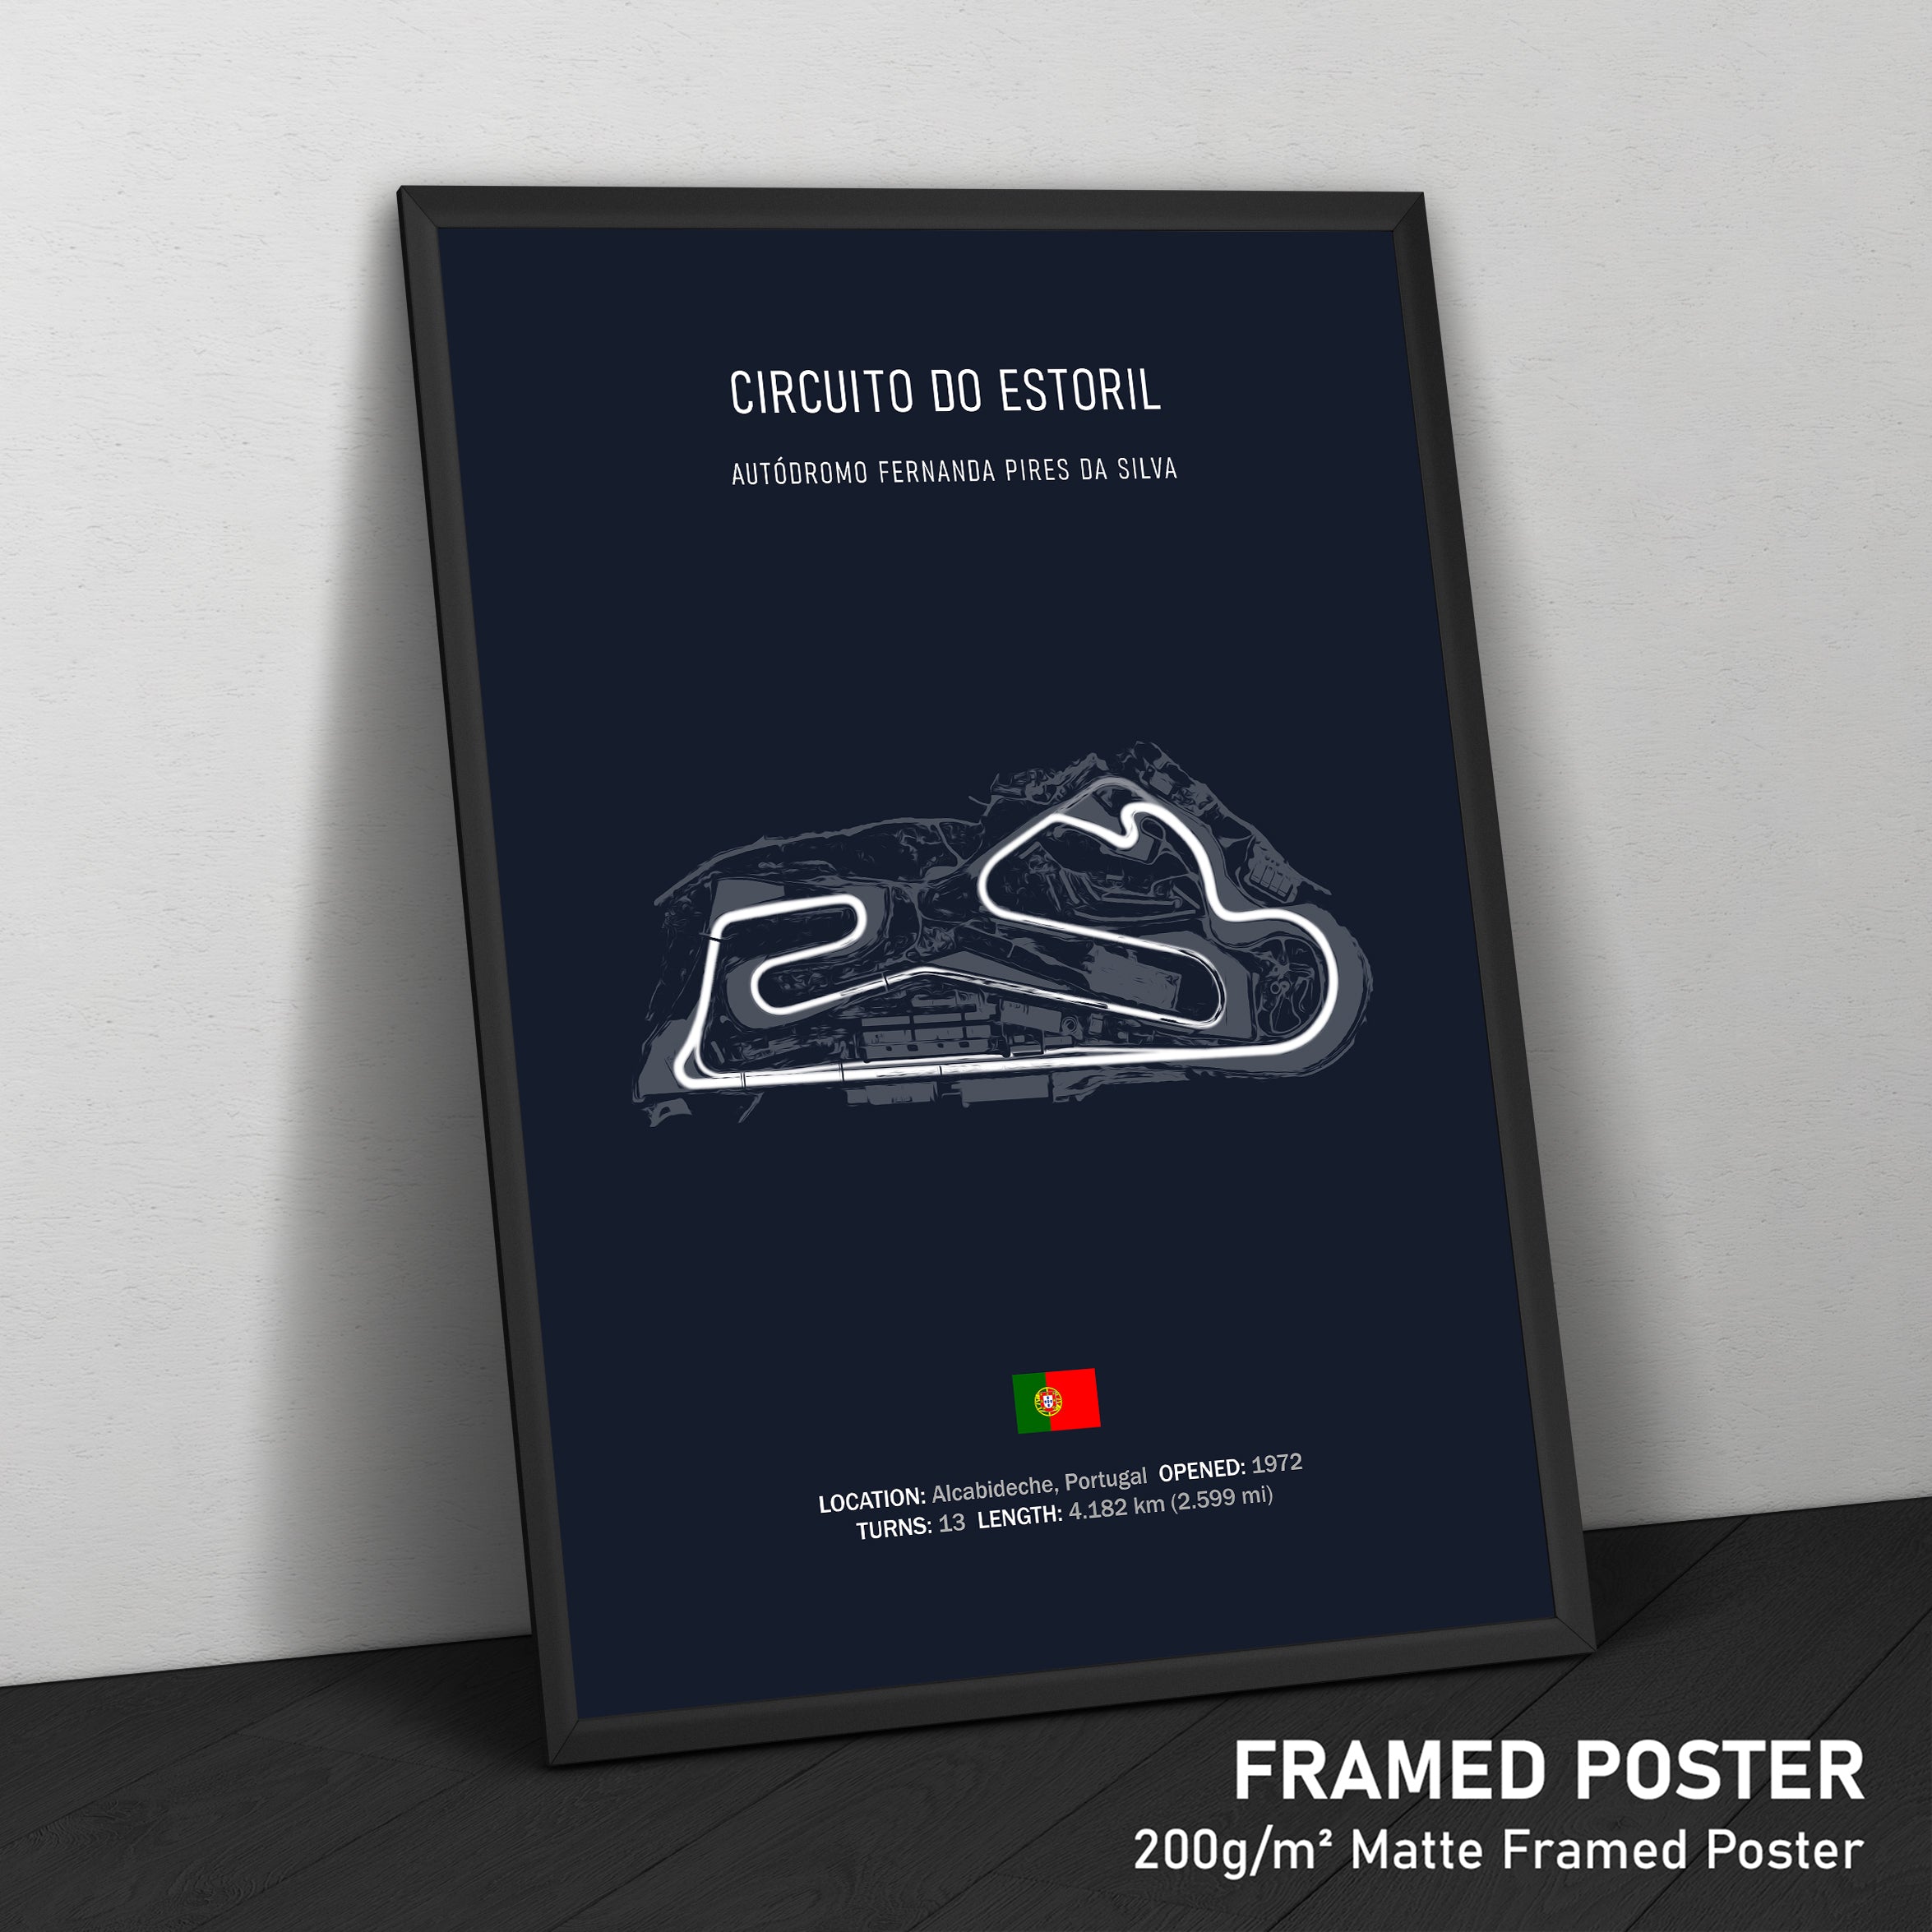 Circuito do Estoril - Racetrack Print